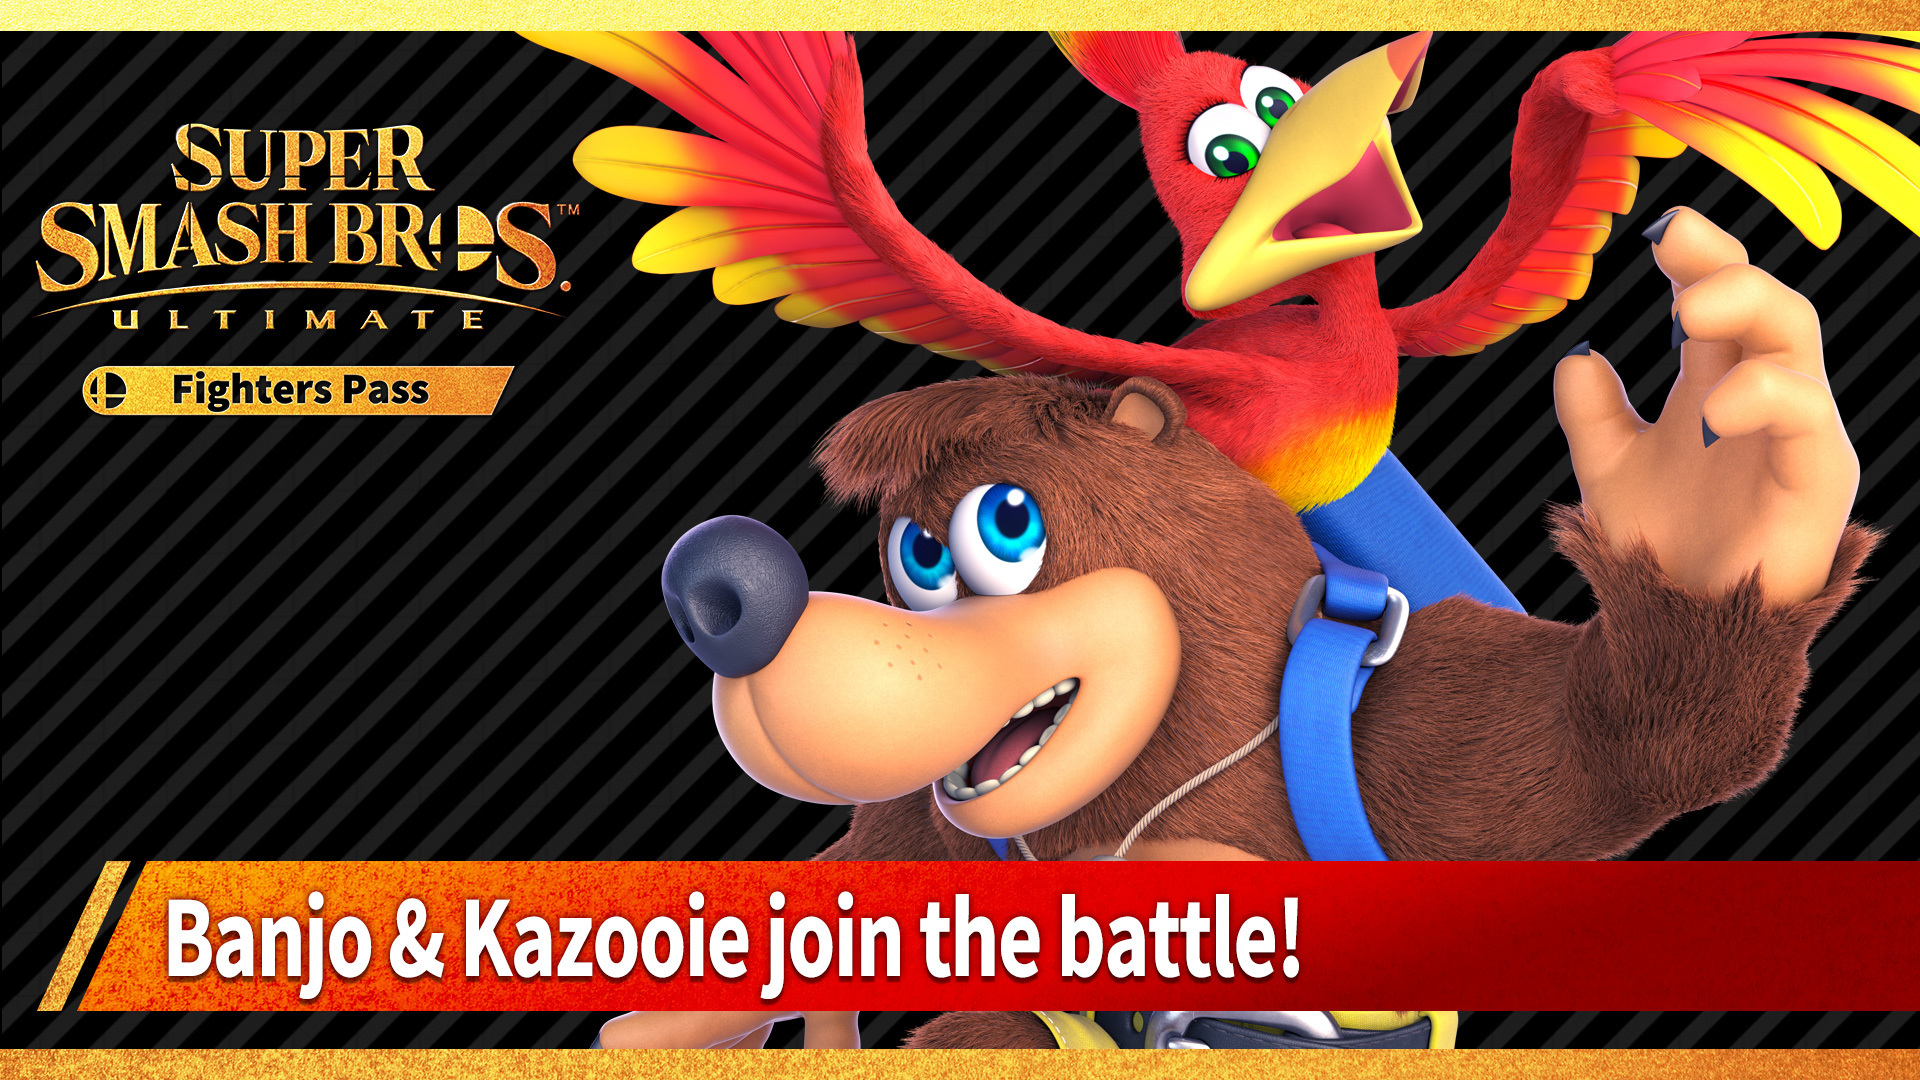 Super Smash Bros. Ultimate: Banjo & Kazooie